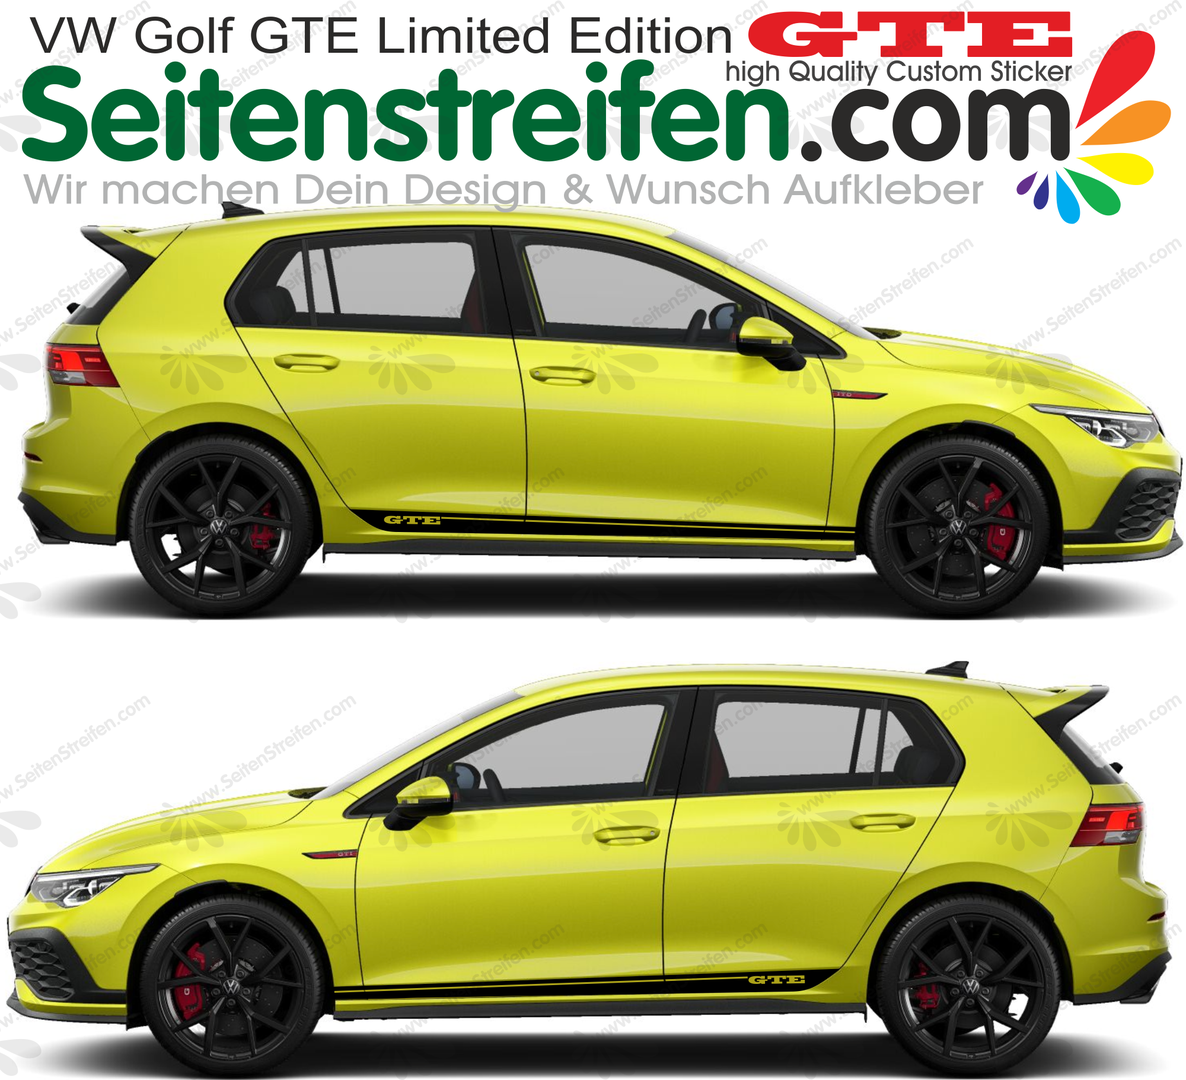 VW Golf GTE Limited Edition - adesivi strisce laterali adesive auto sticker set